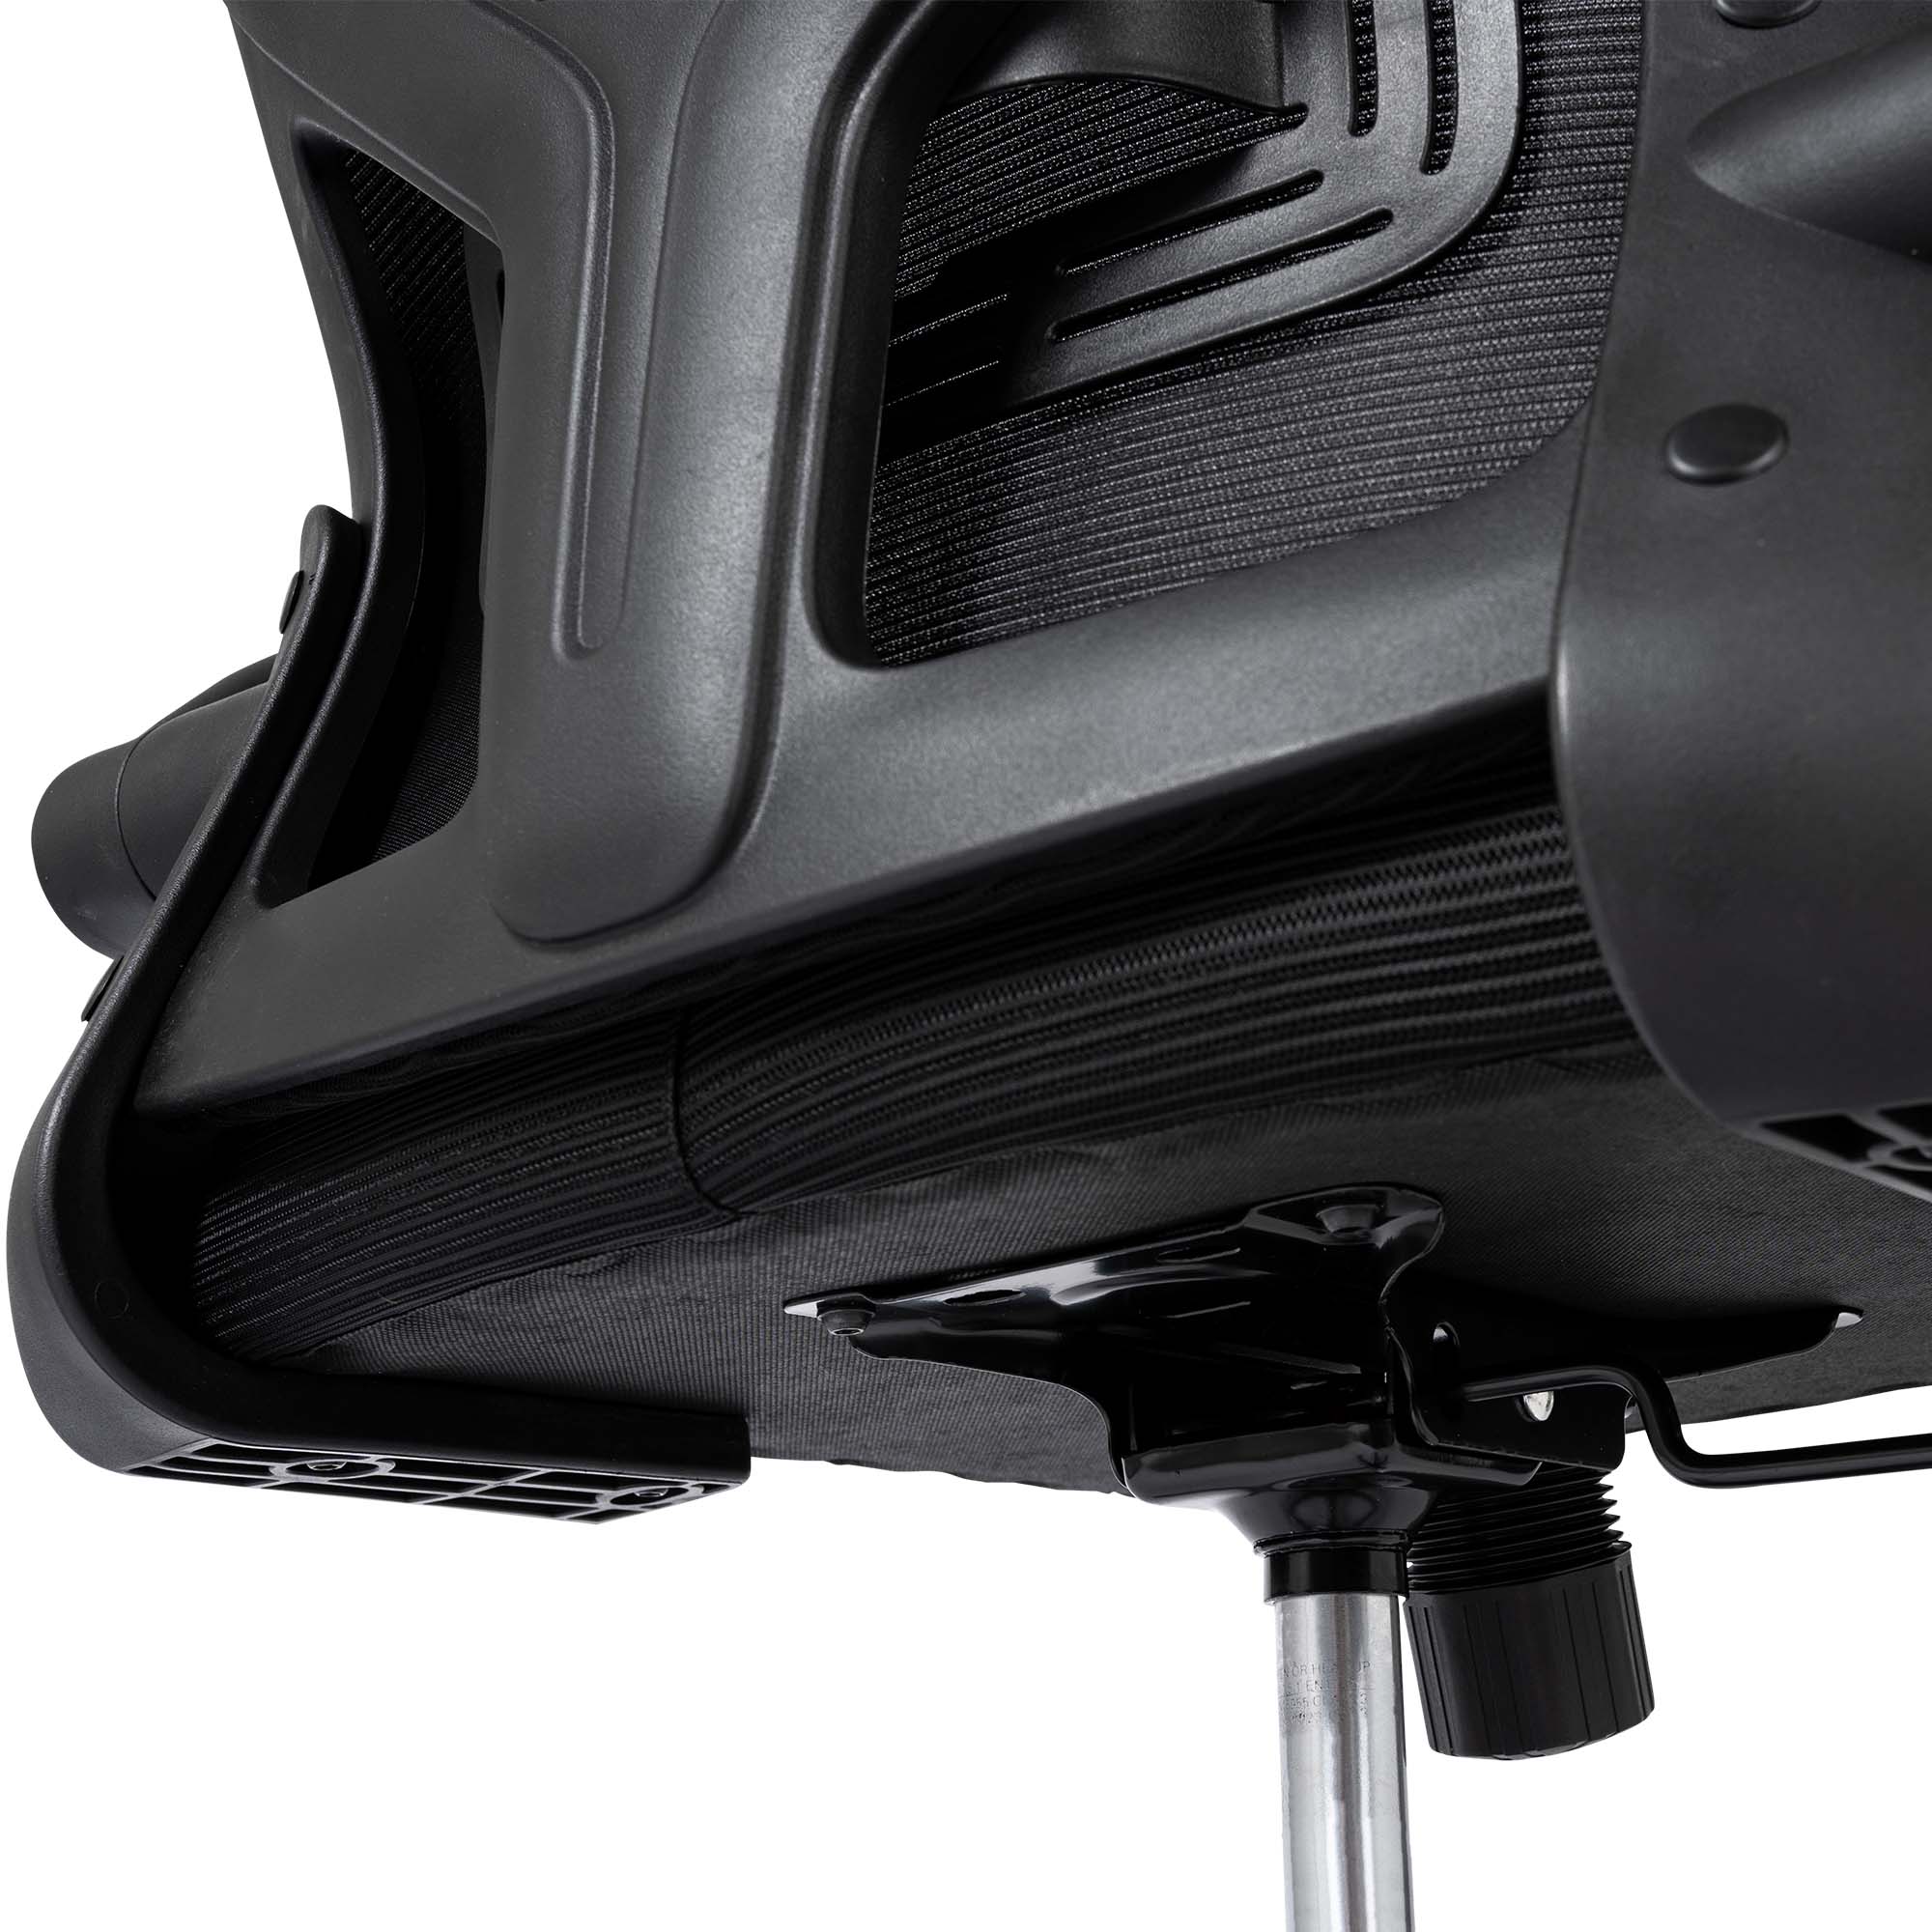 Ergodu Ergonomic Office Chair with Foldable Armrests underside